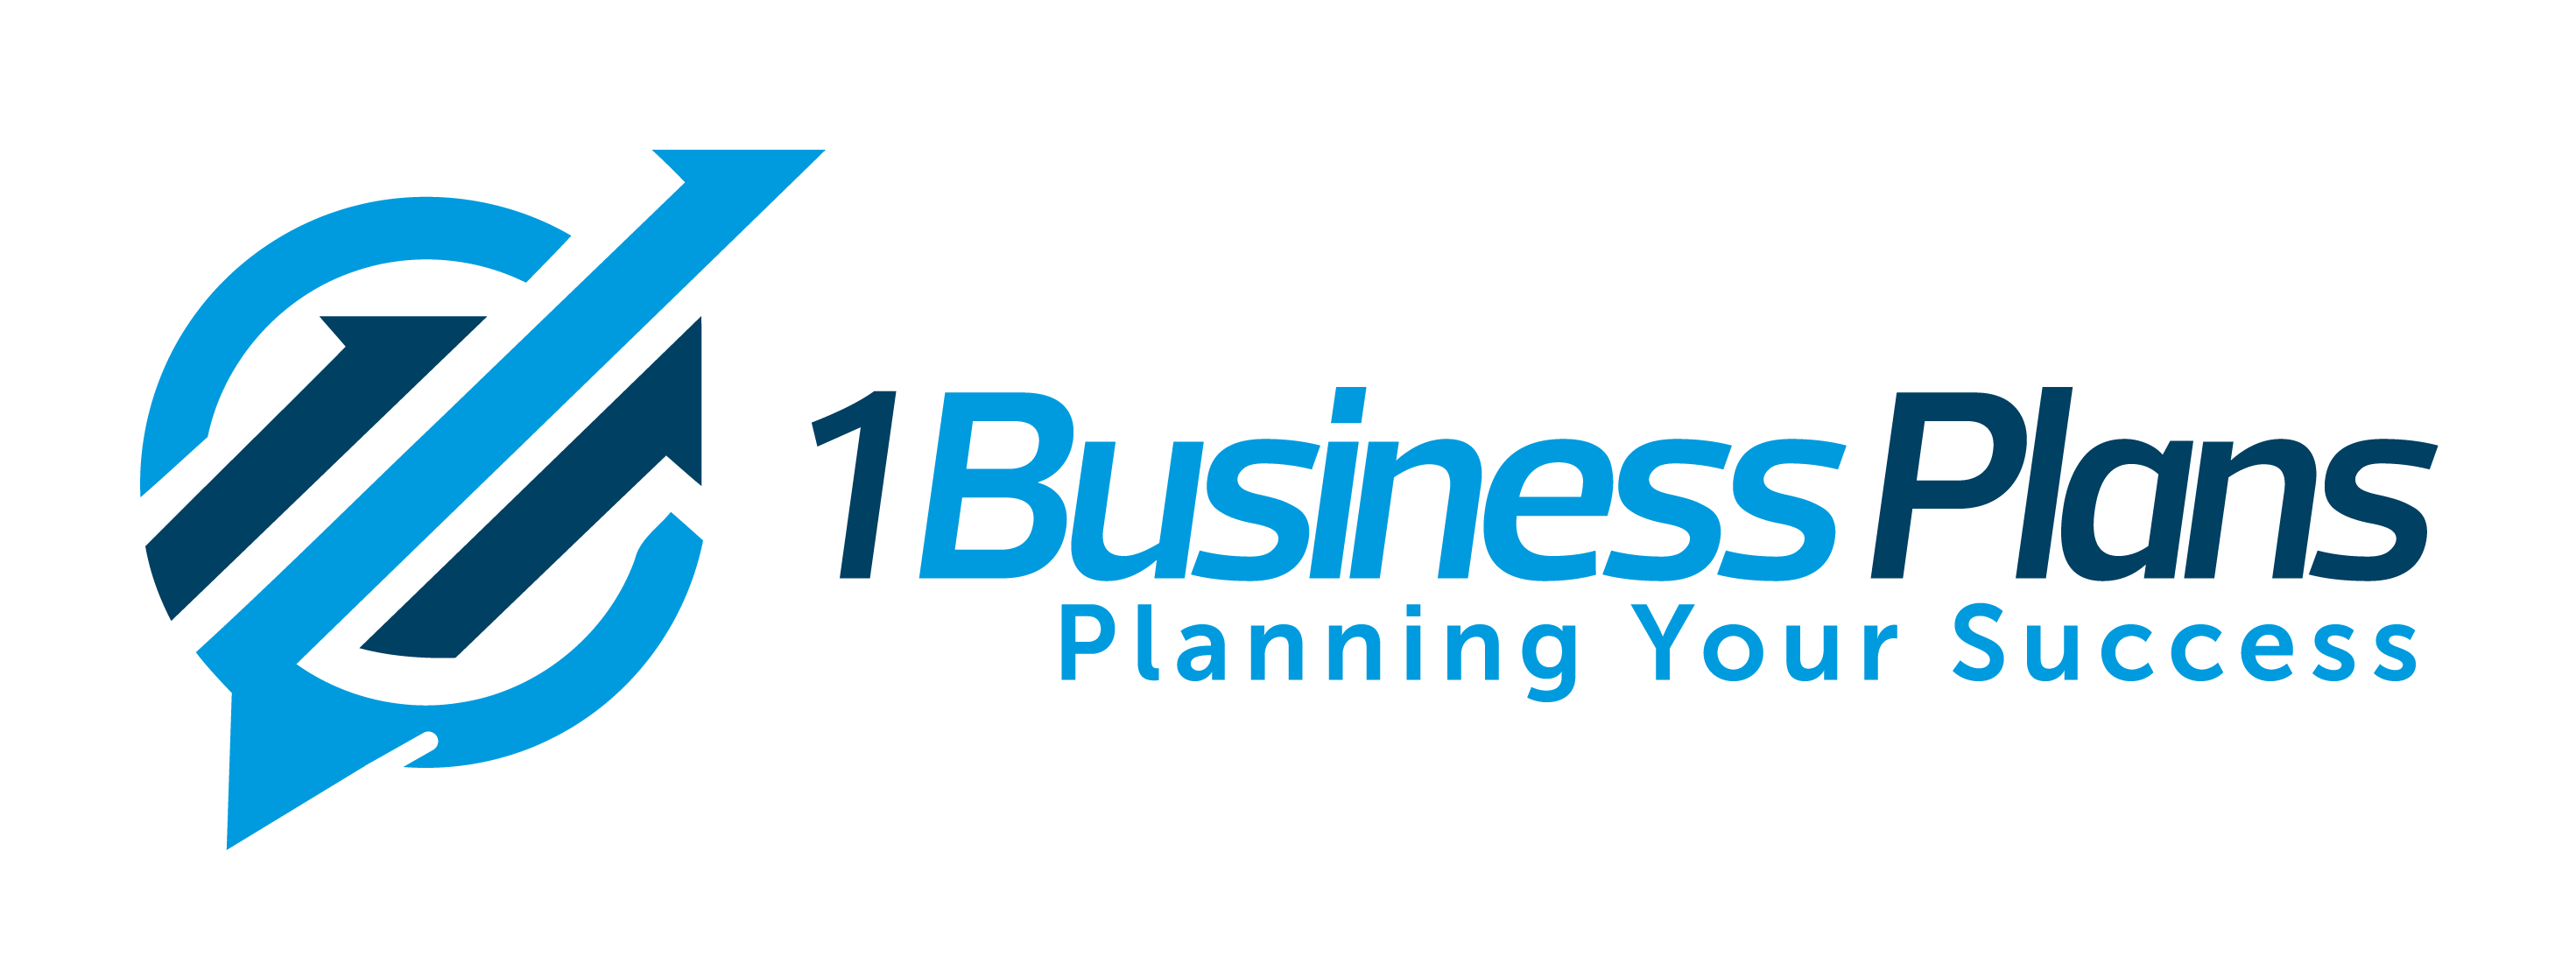 business plan logo images